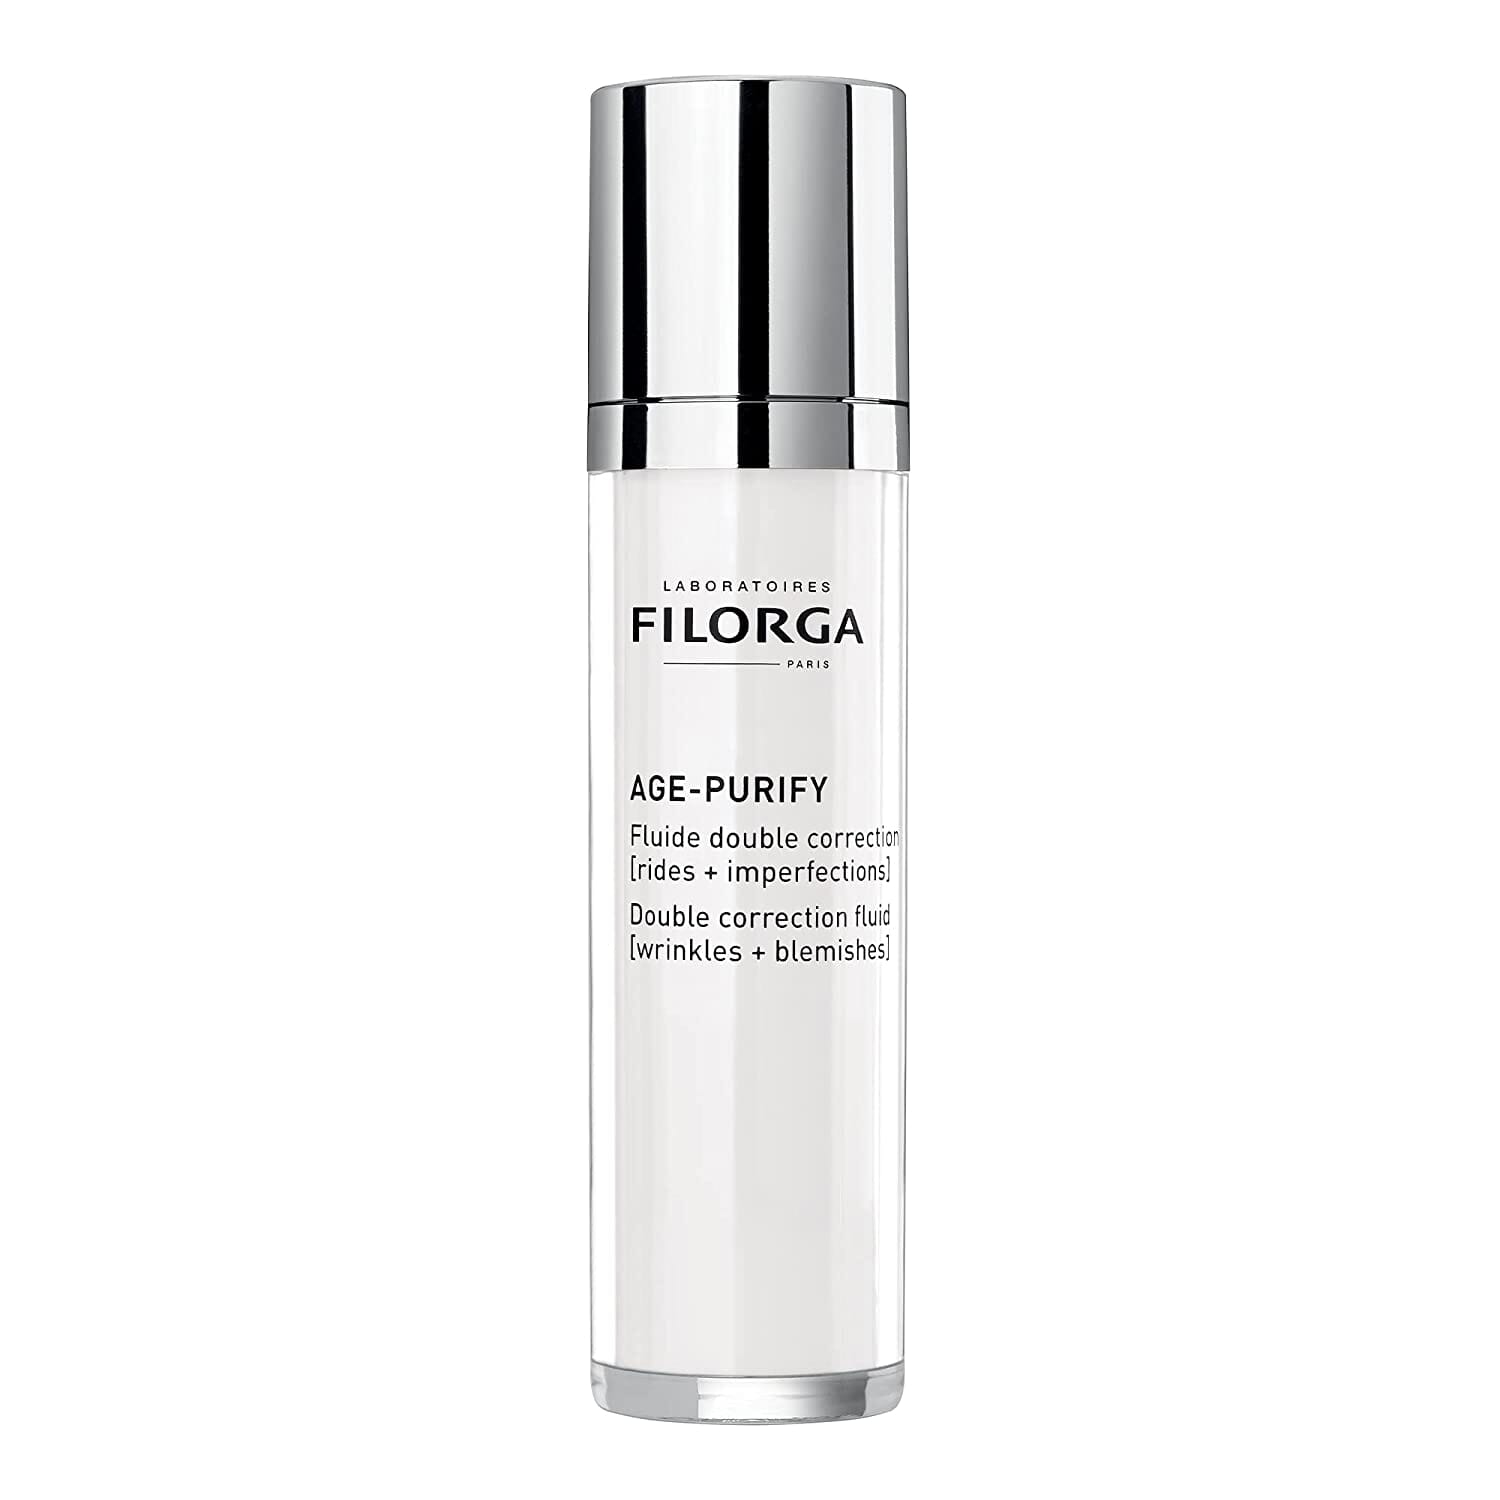 Filorga Age Purify Anti-Aging & Blemish Treatment Fluid Filorga 1.69 fl. oz. Shop at Exclusive Beauty Club